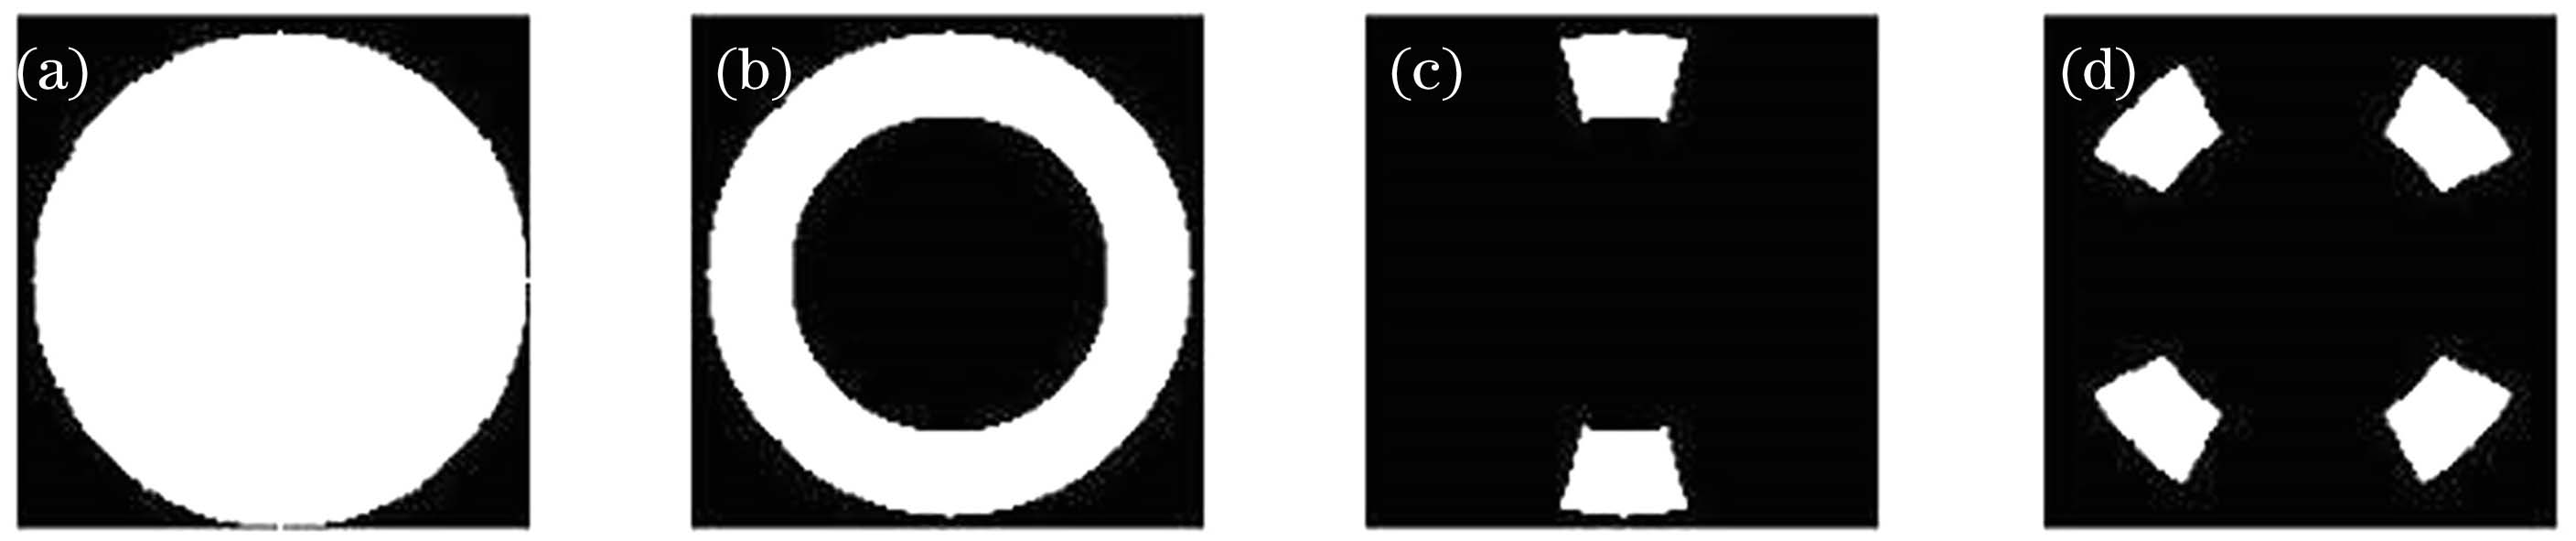 Diagrams of illumination modes. (a) Circular; (b) annular; (c) dipole; (d) quadrupole